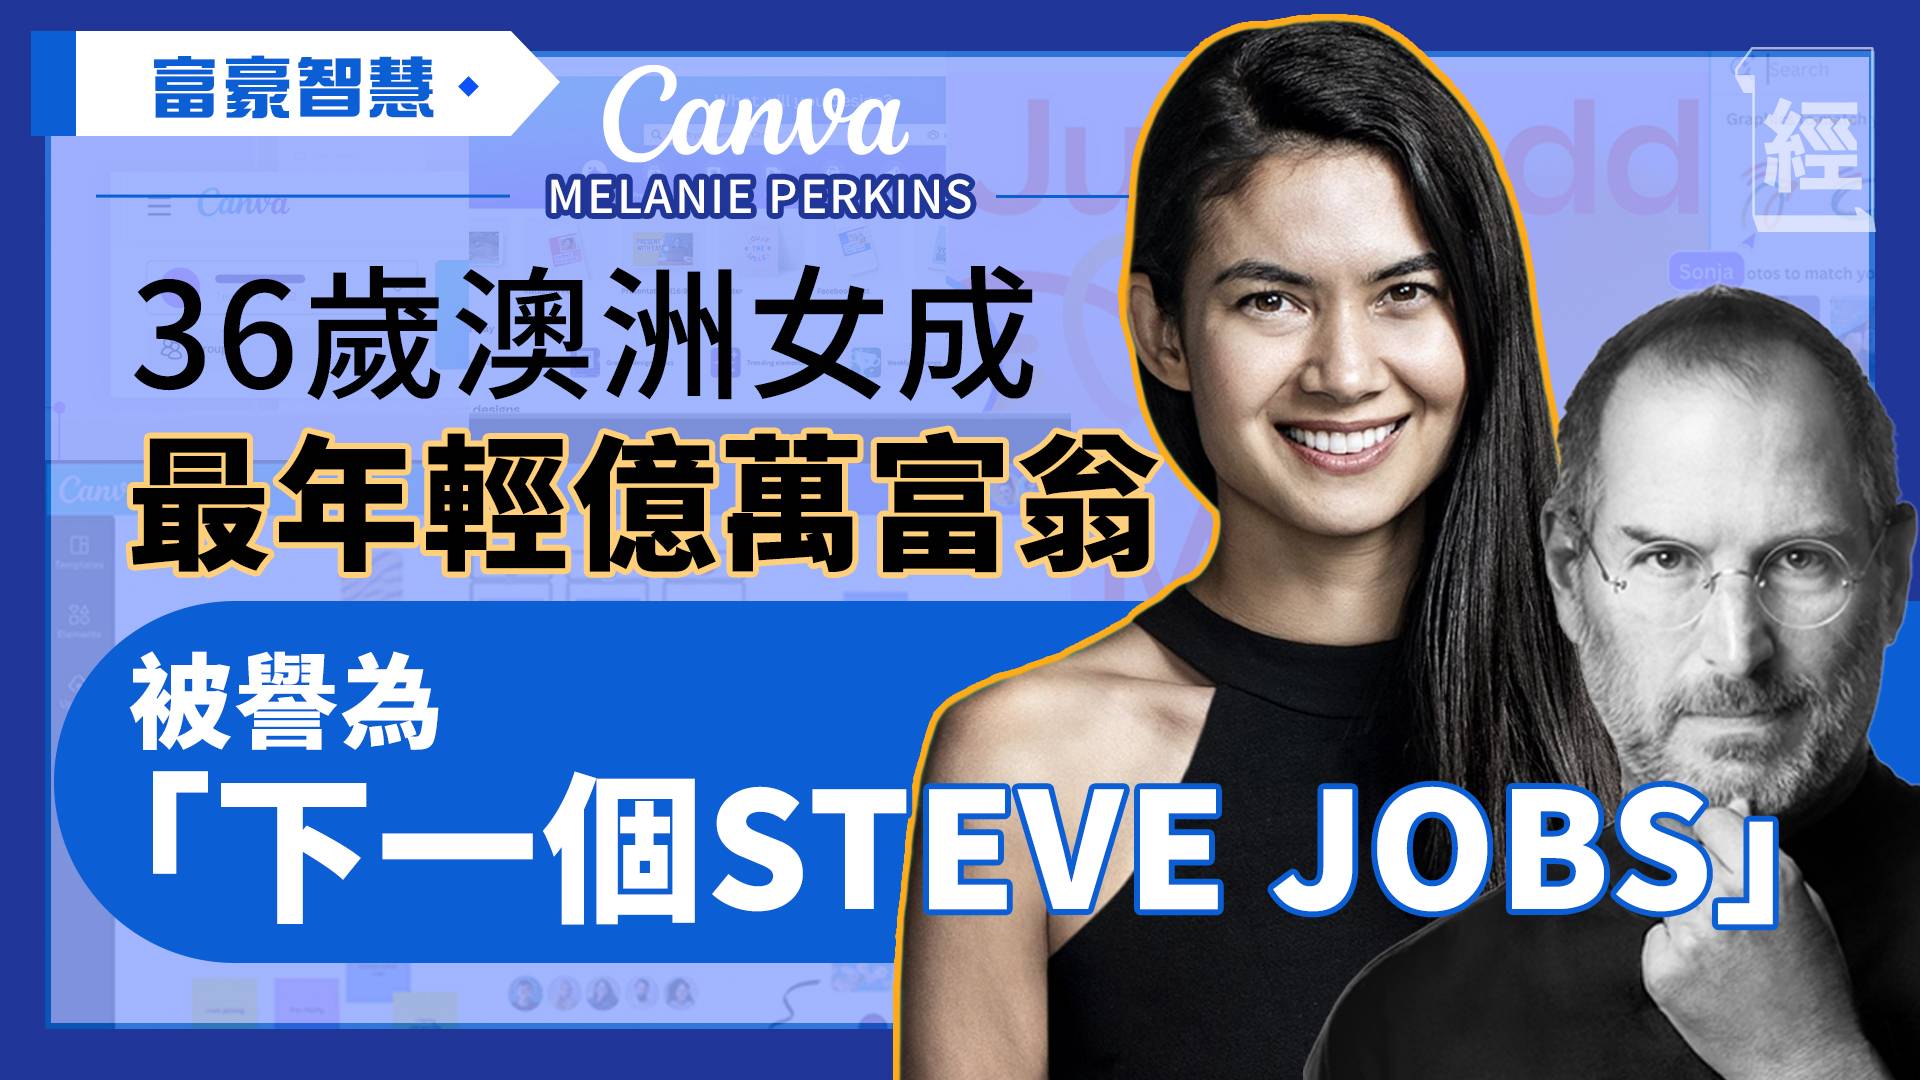 Canva 創辦人是「80後」大學未畢業已成為最年輕億萬富翁 被譽為女版Steve Jobs